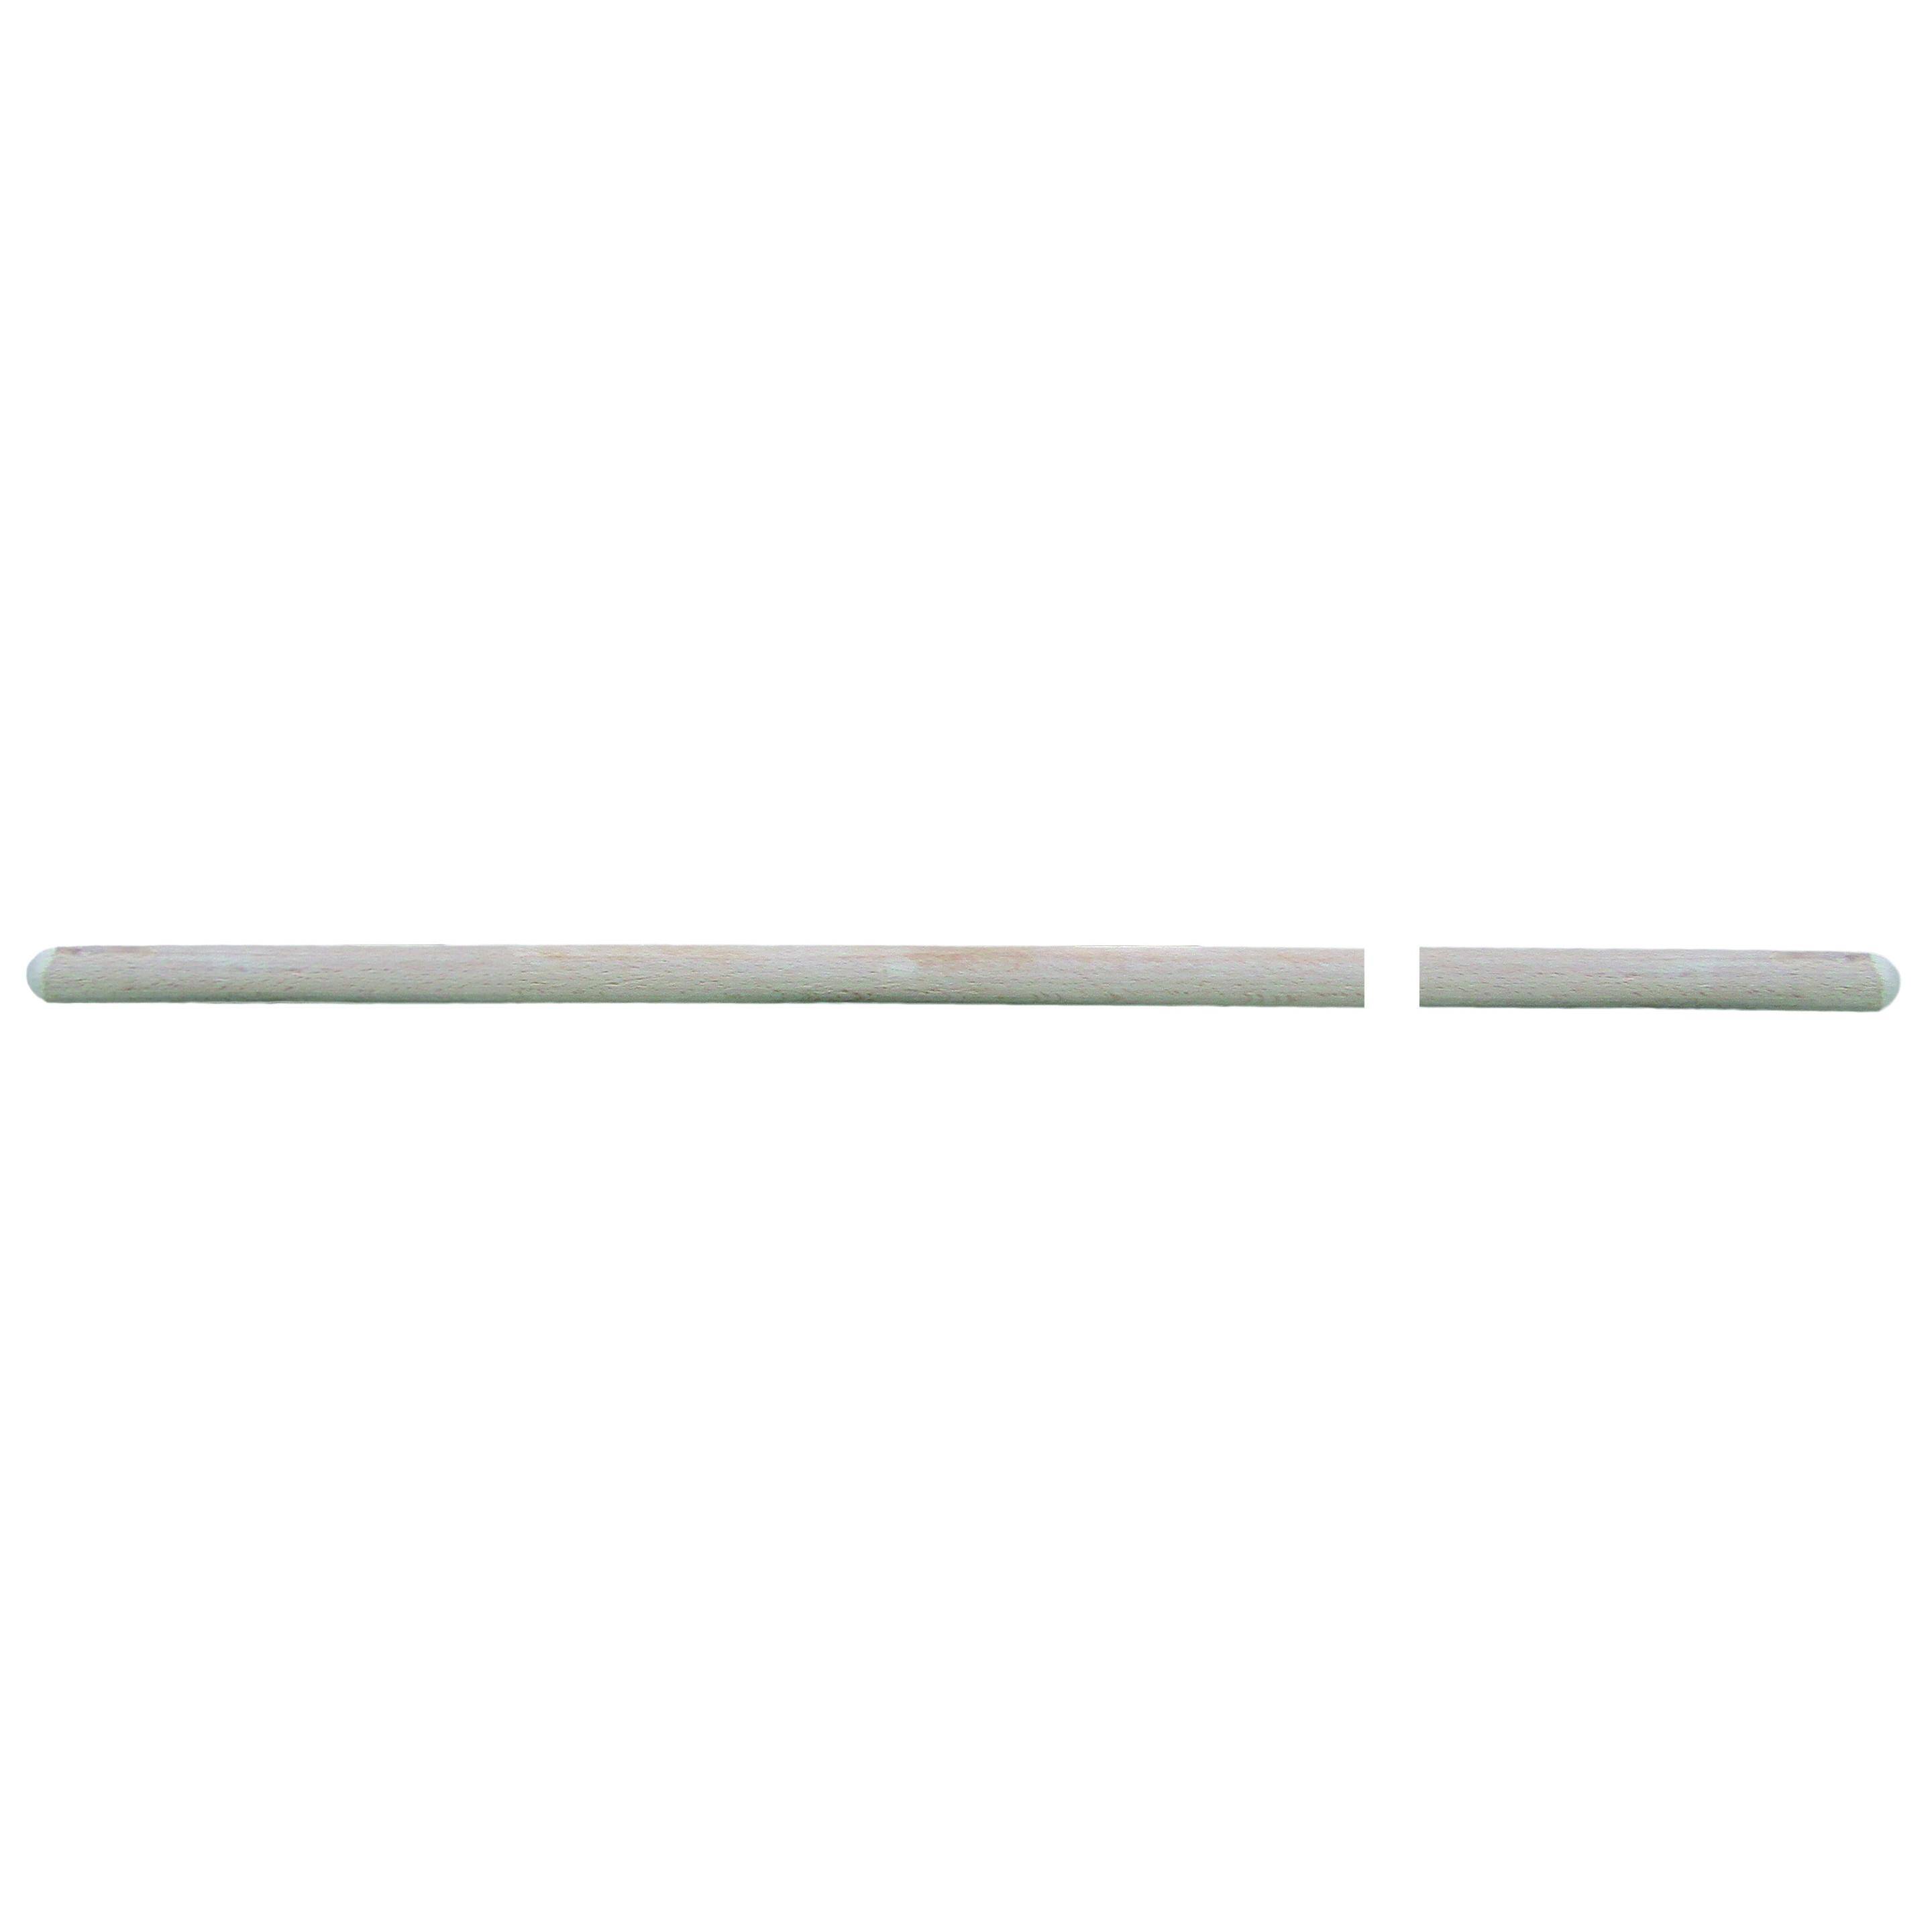 Pole for street broom with metal scraper 140 cm